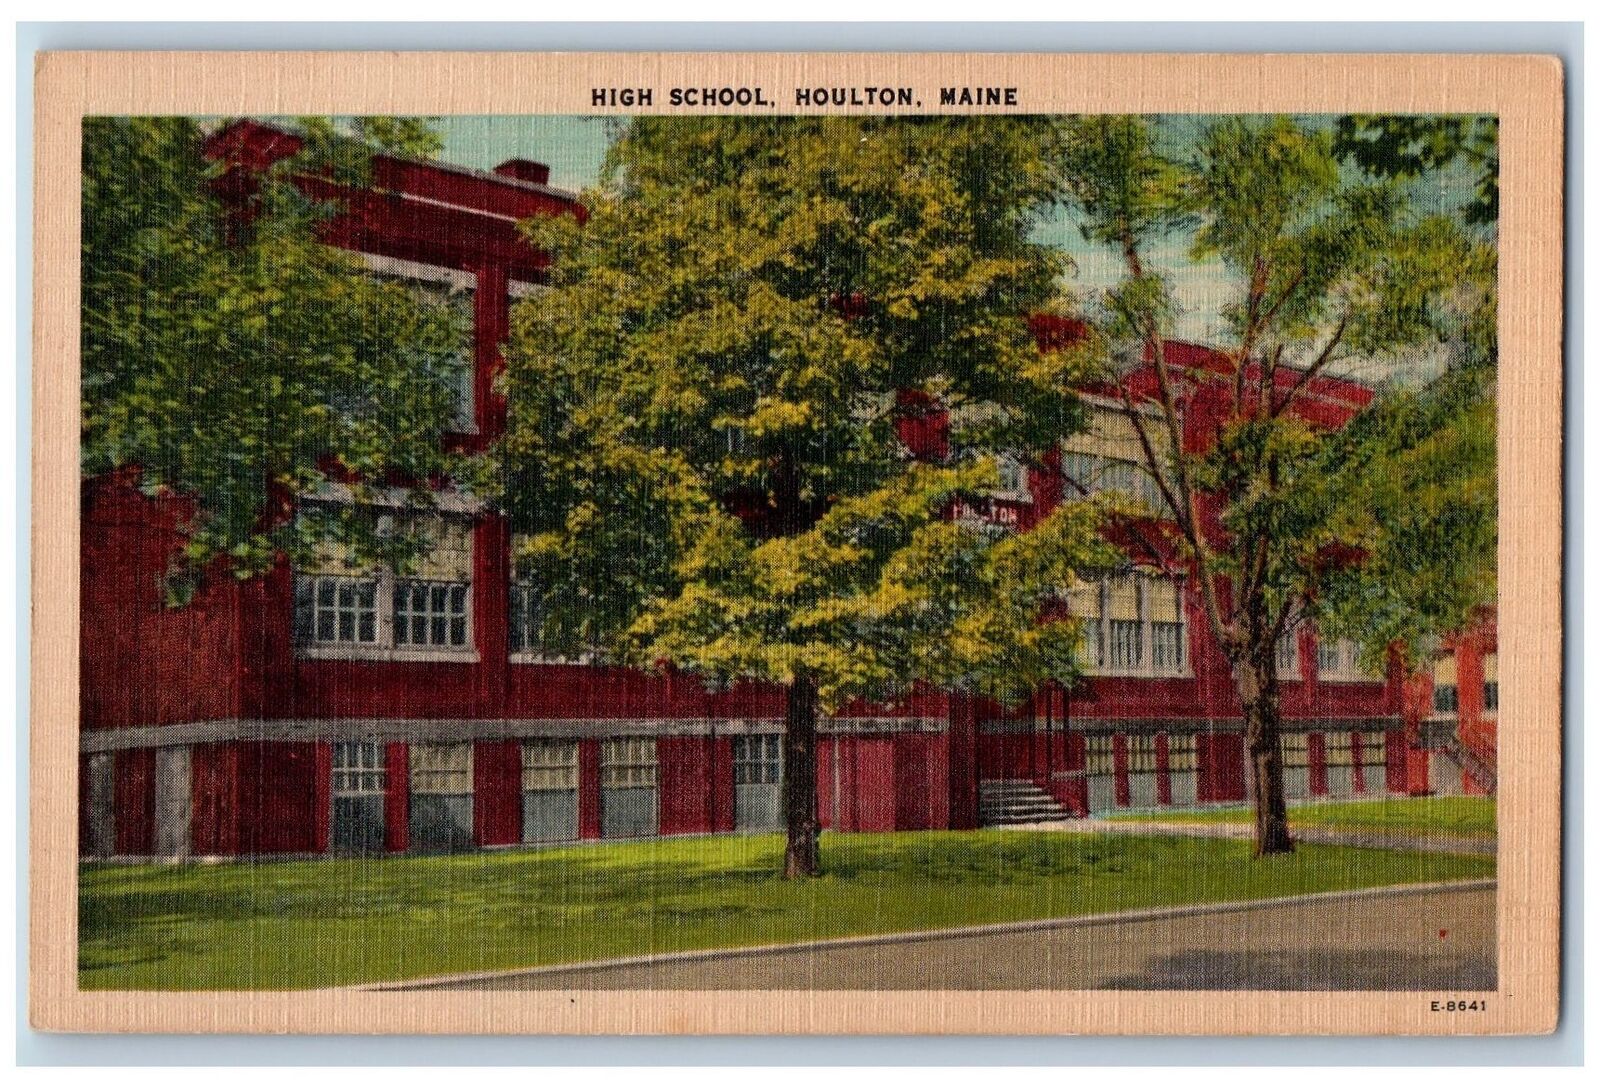 c1940 High School Campus Building Grove Roadside Houlton Maine Vintage Postcard